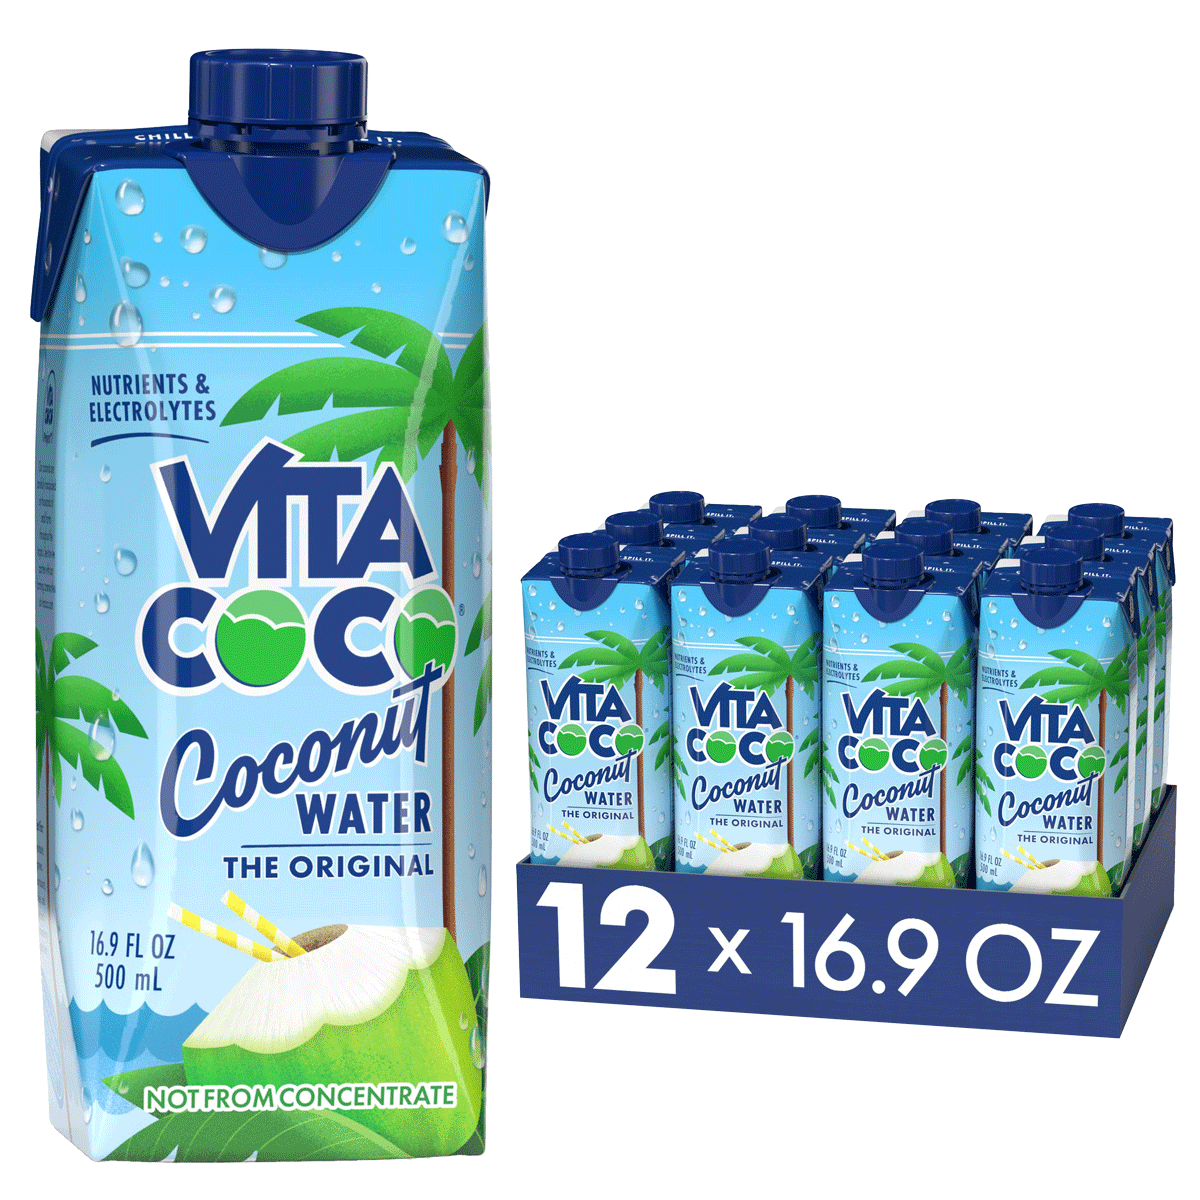 Vita Coco Coconut Water (12x 16.9oz bottles)